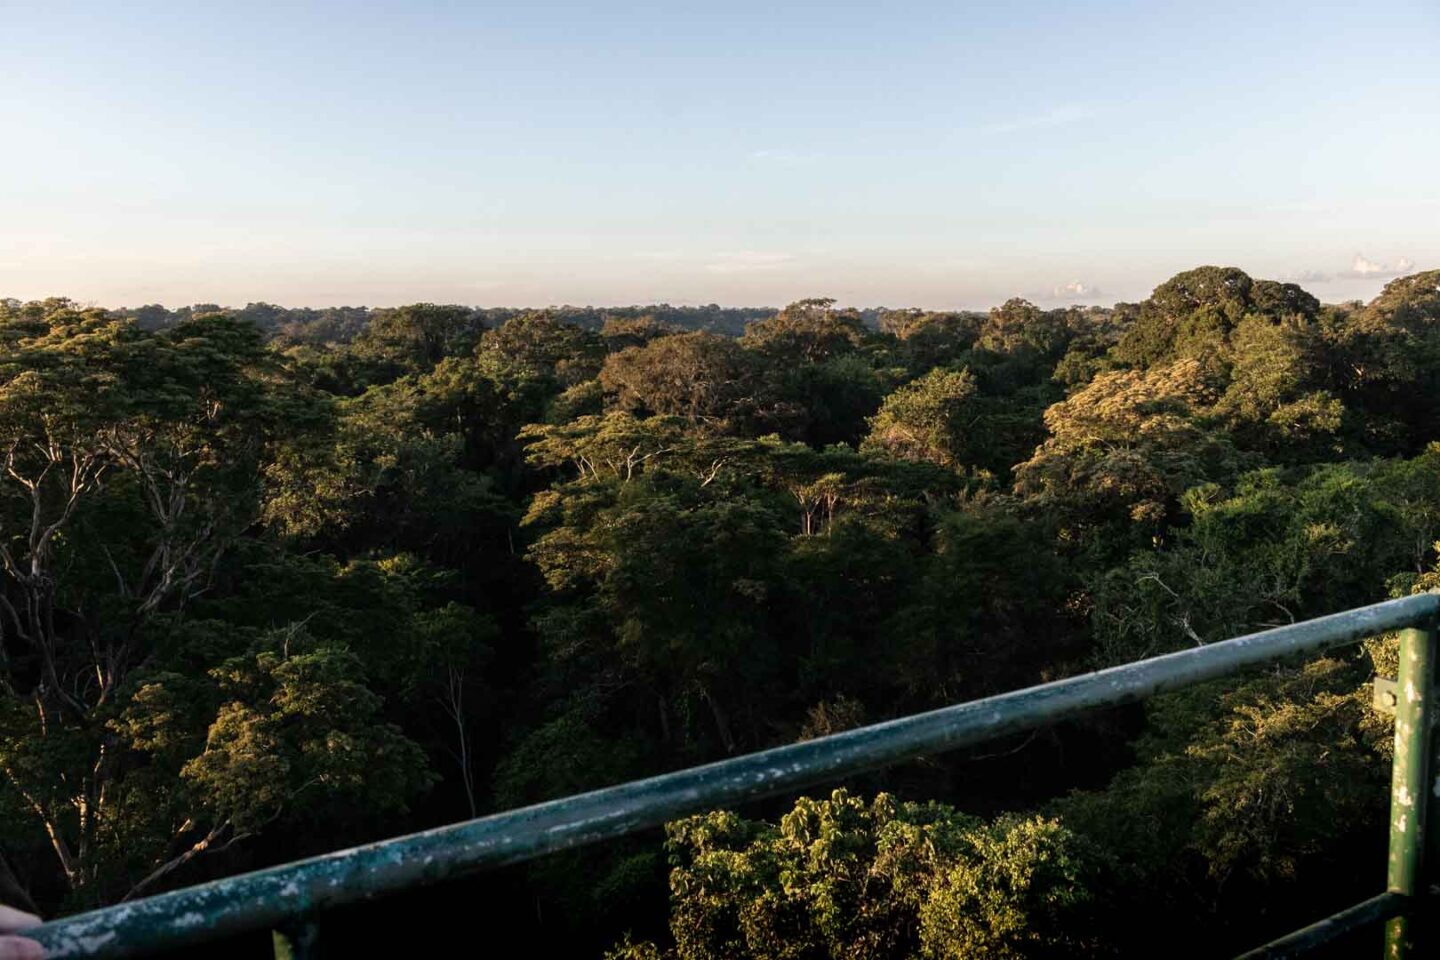 Amazon Rainforest canopy tower